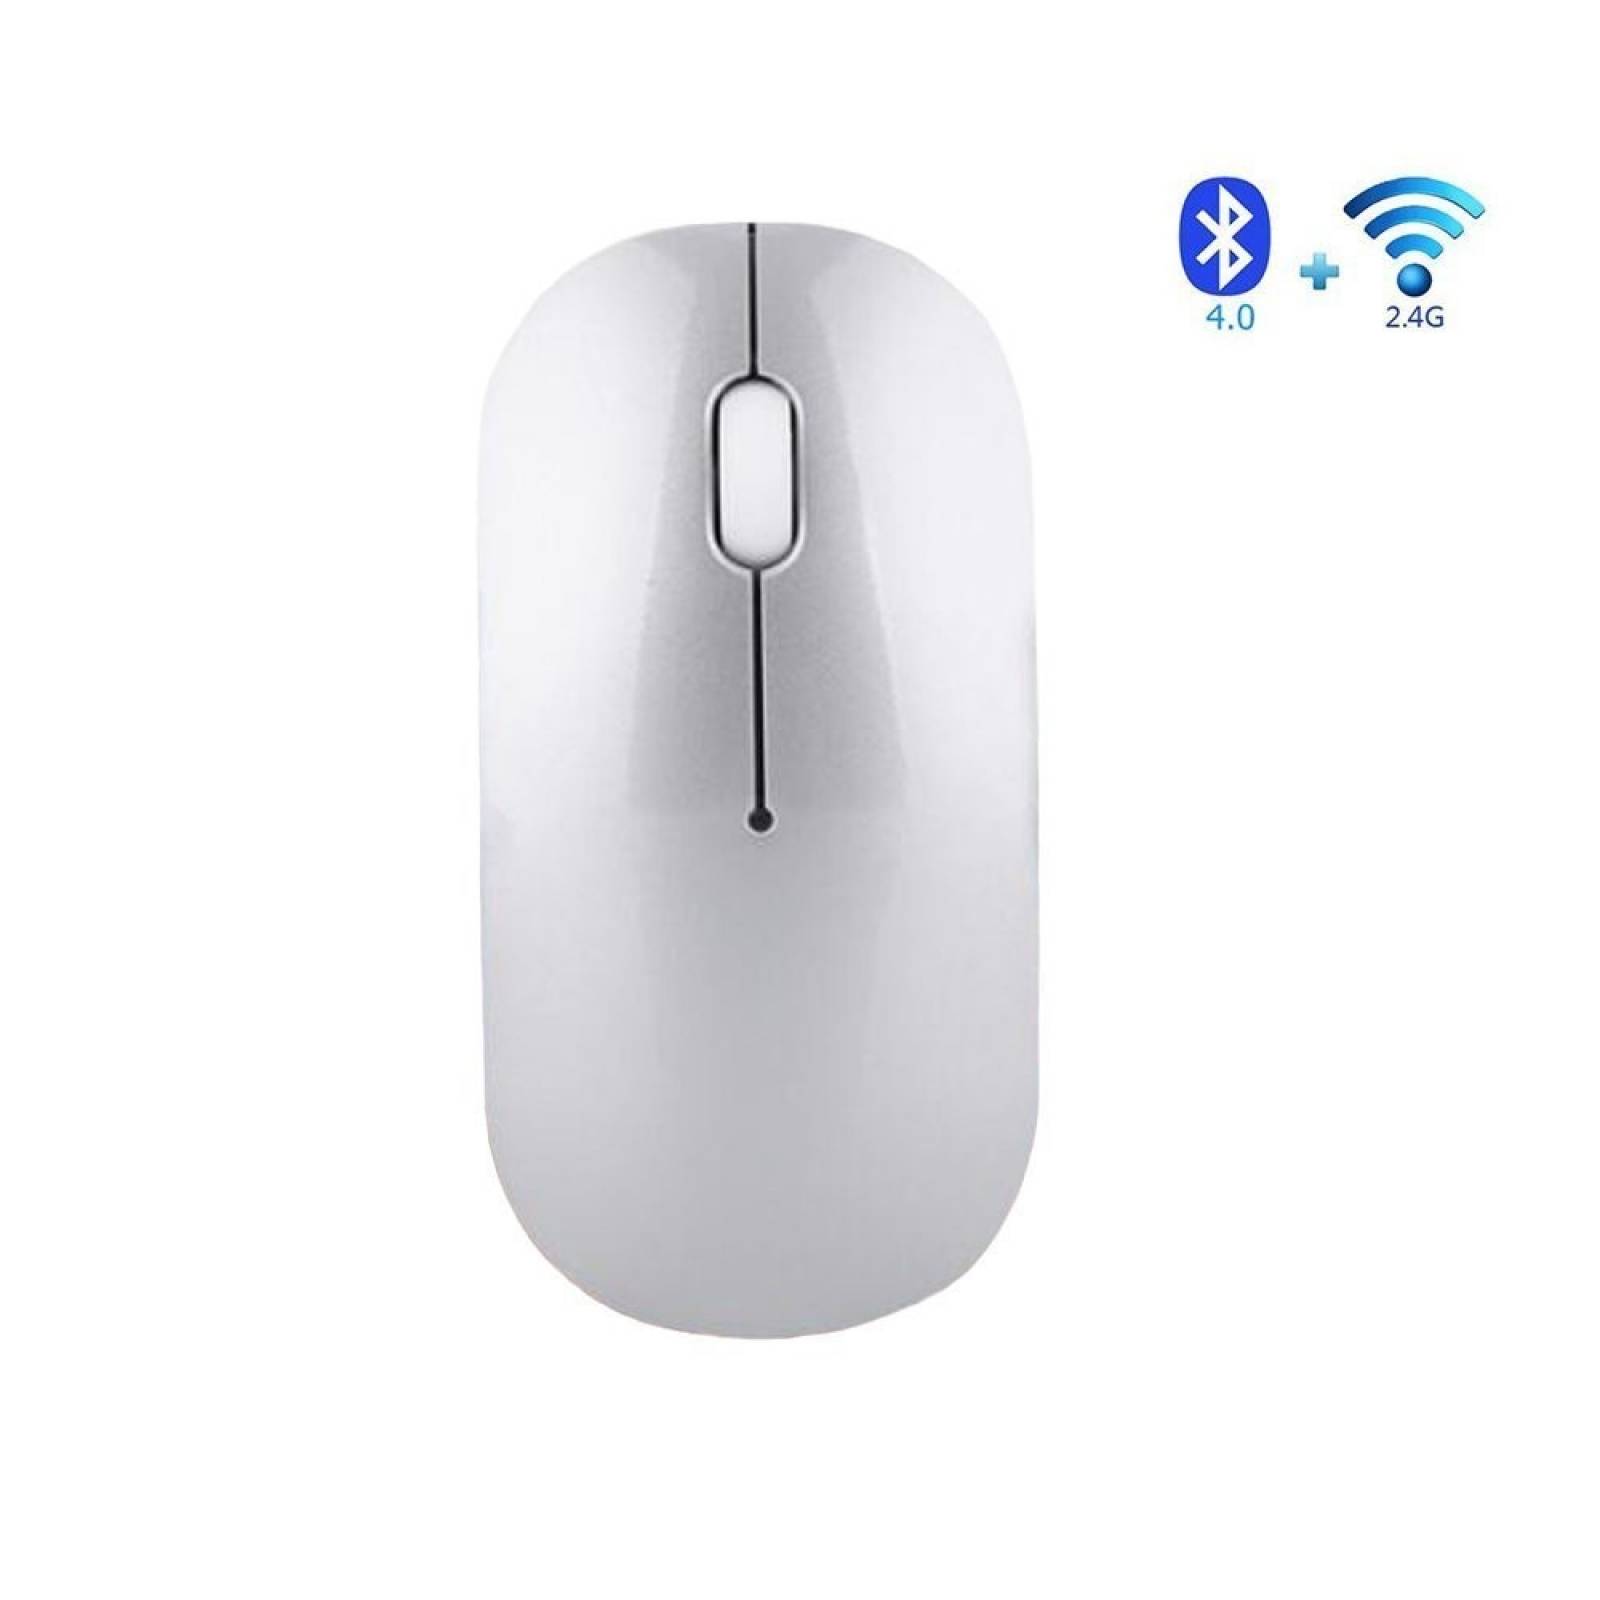 Mouse Attoe Inalambrico 2.4GHz Bluetooth -Plateado